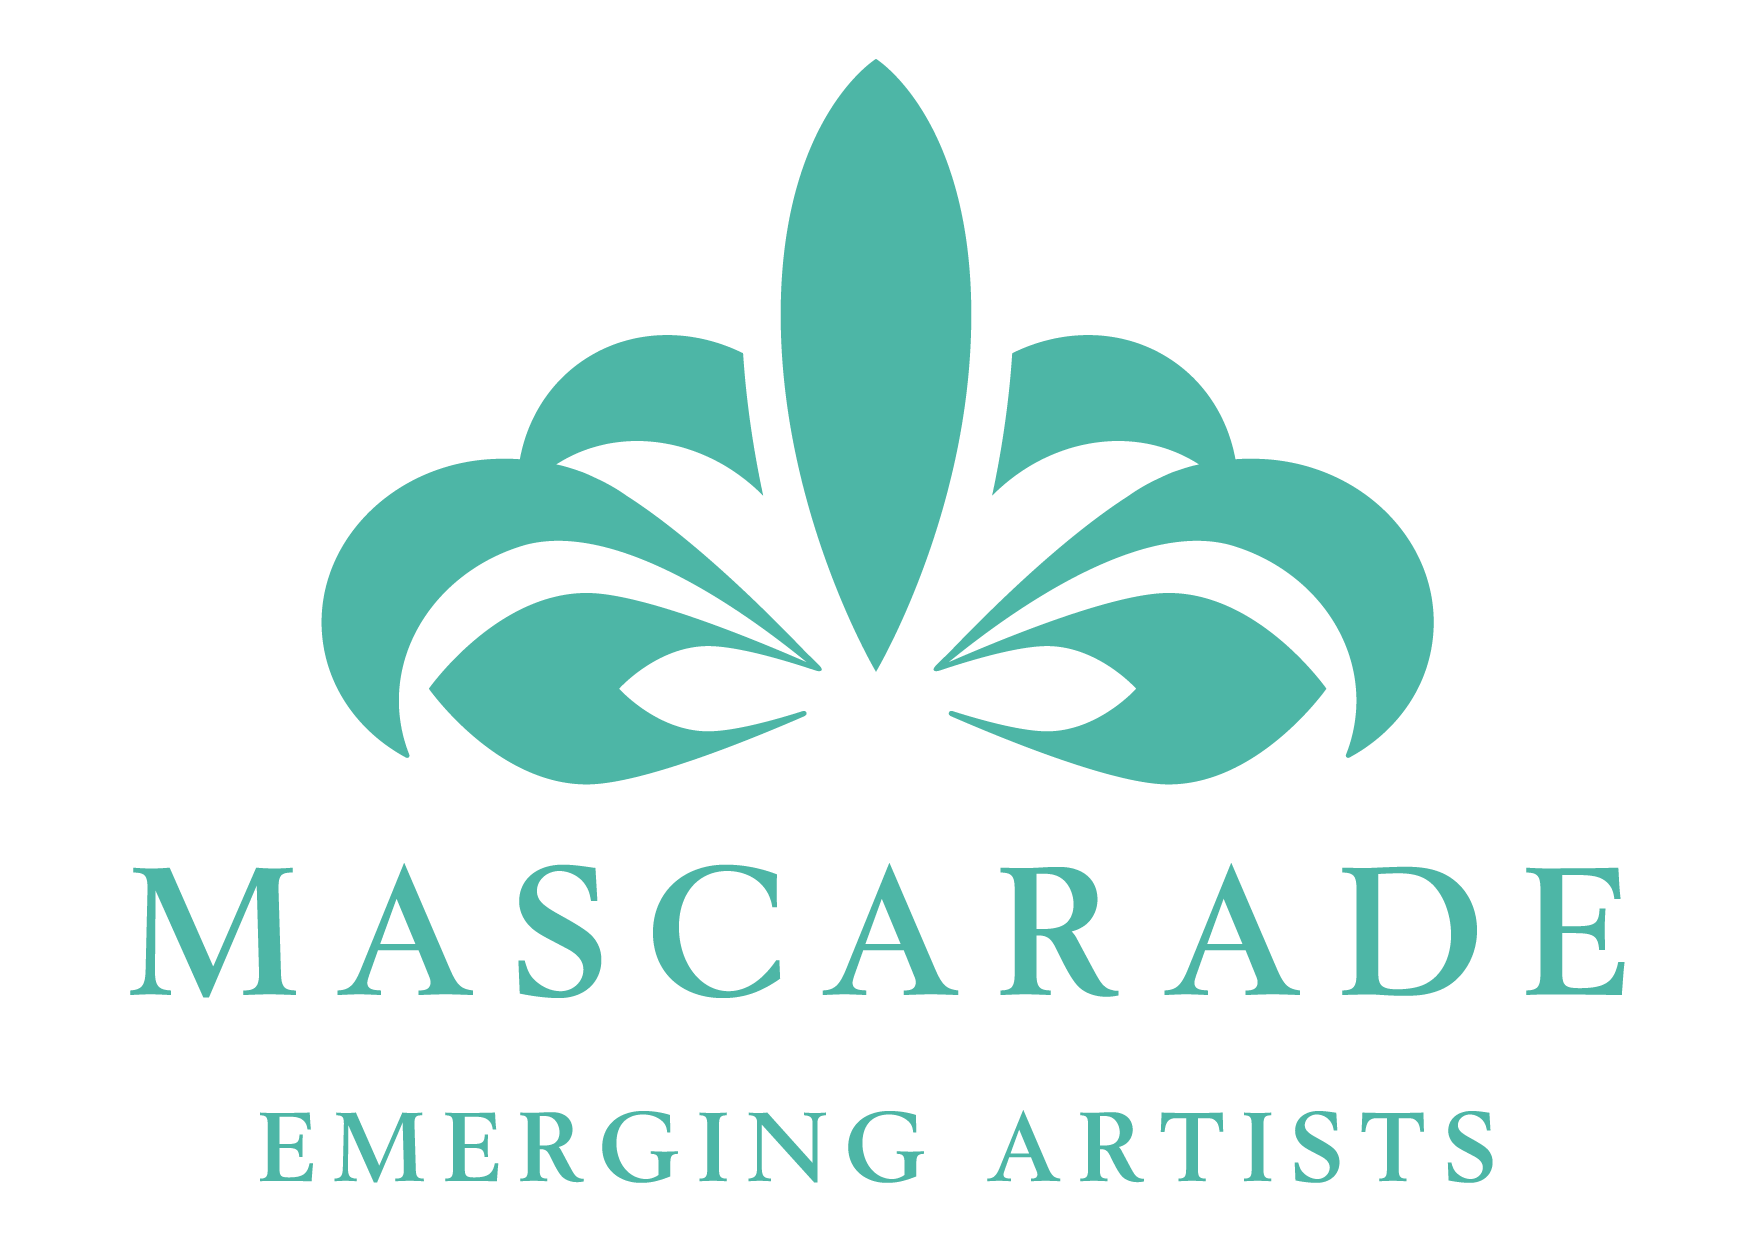 MASCARADE EMERGING ARTISTS